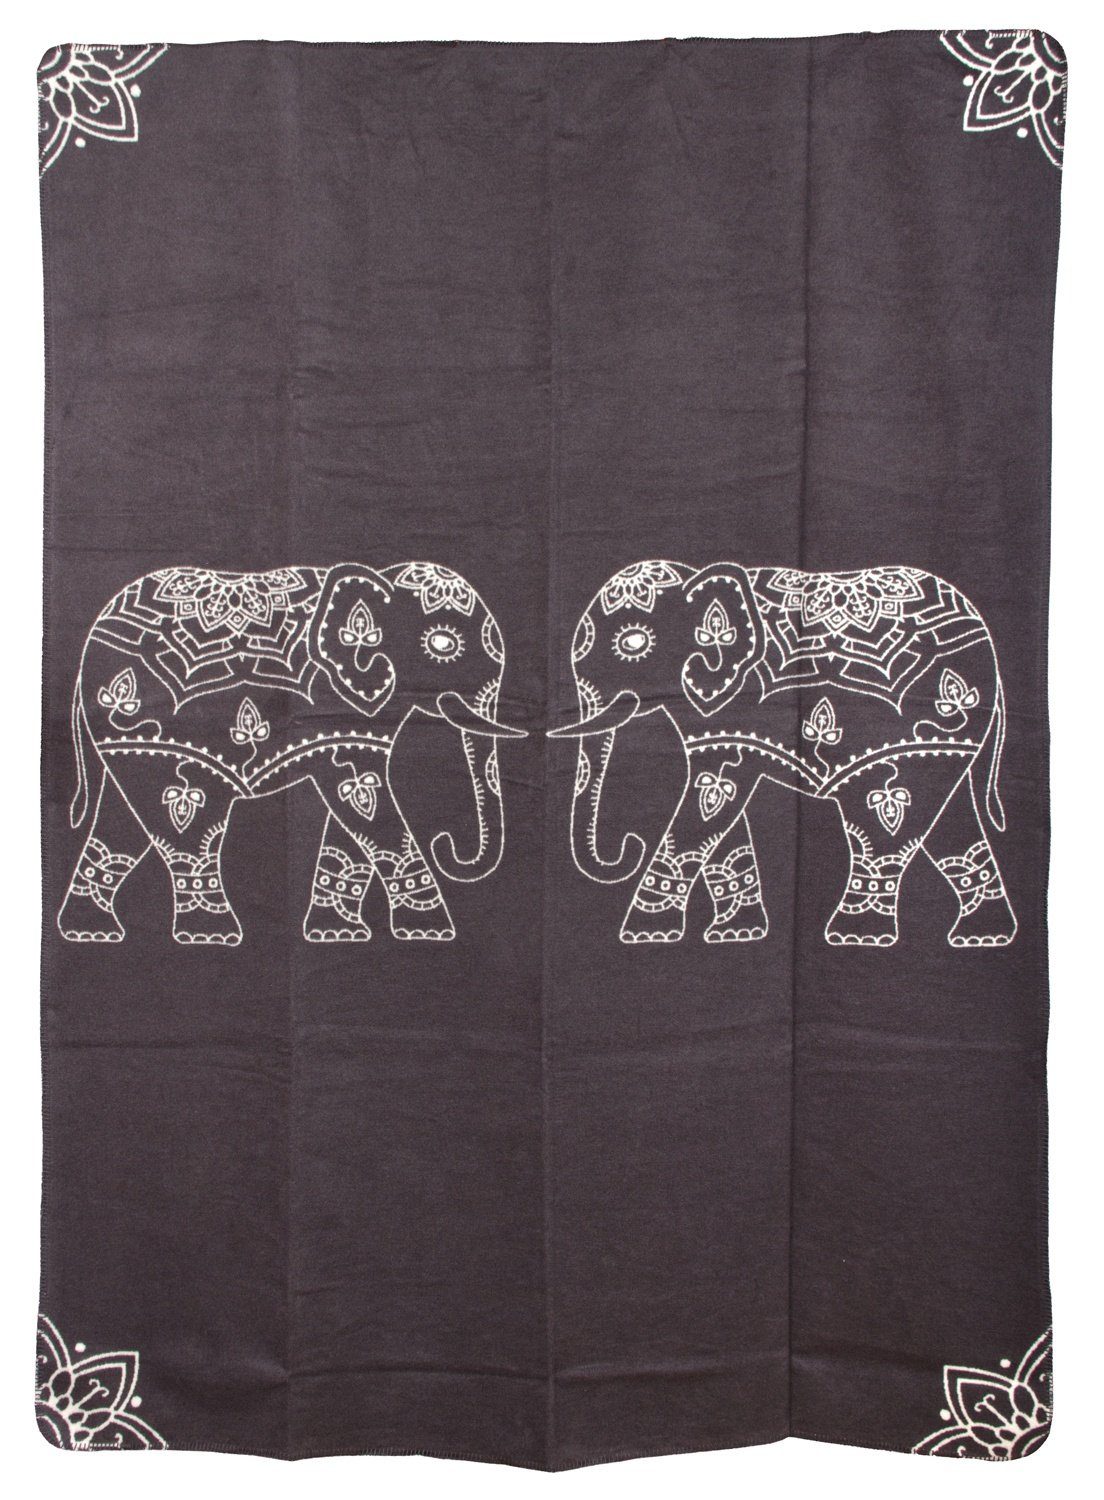 x cm, natur dunkelgrau Wolldecke 150 Elefanten 200 yogabox, regional Yogadecke hergestellt /